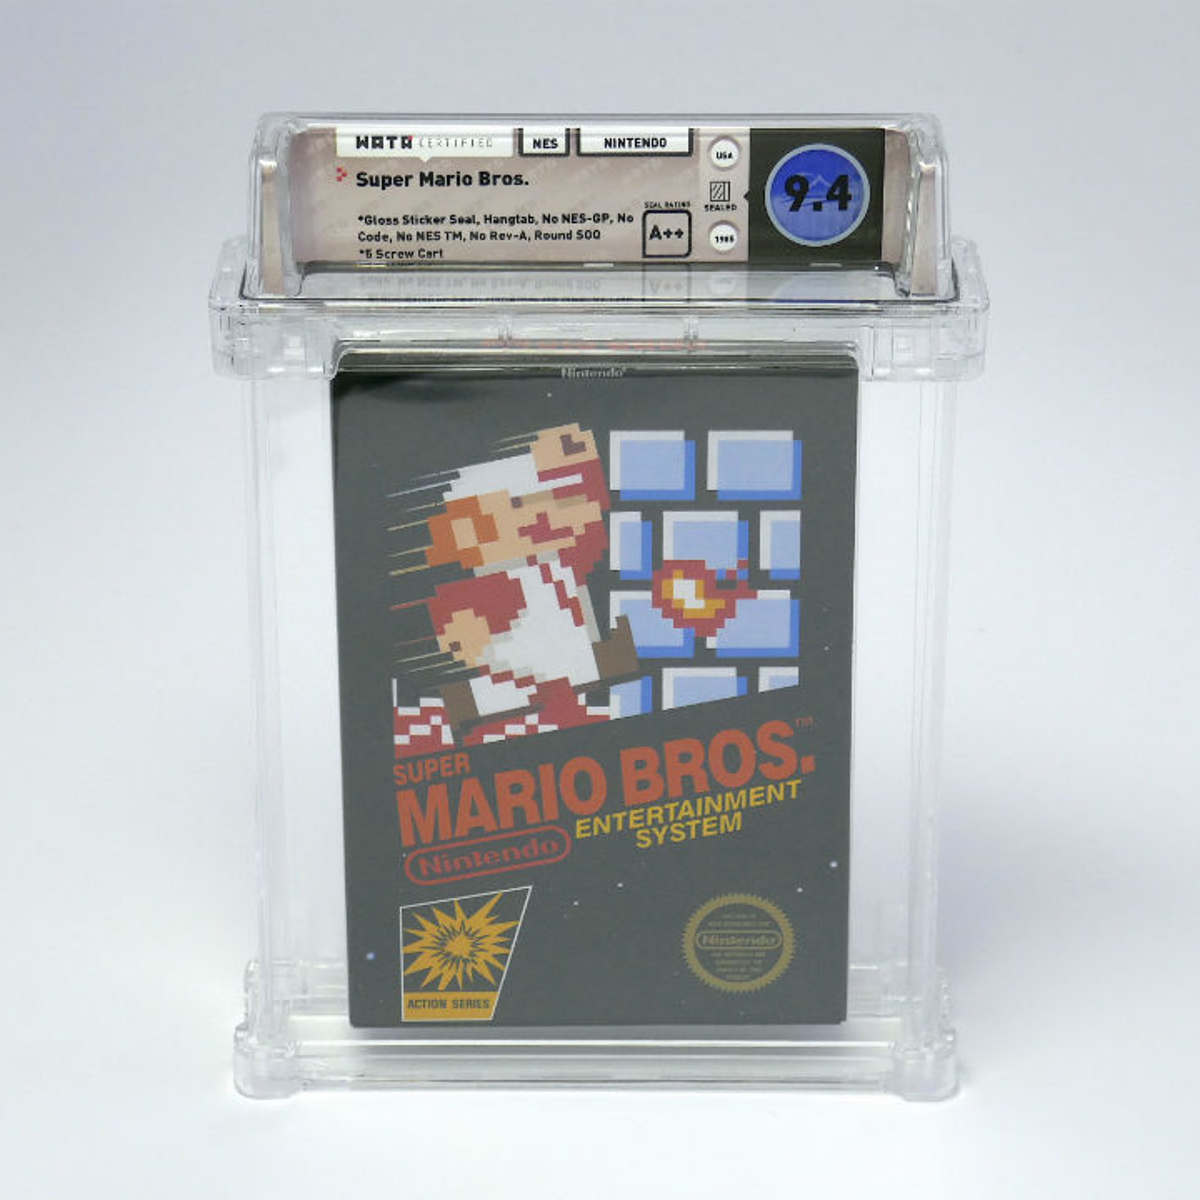 Super Mario Bros. (1985) Full Walkthrough NES Gameplay [Nostalgia] 